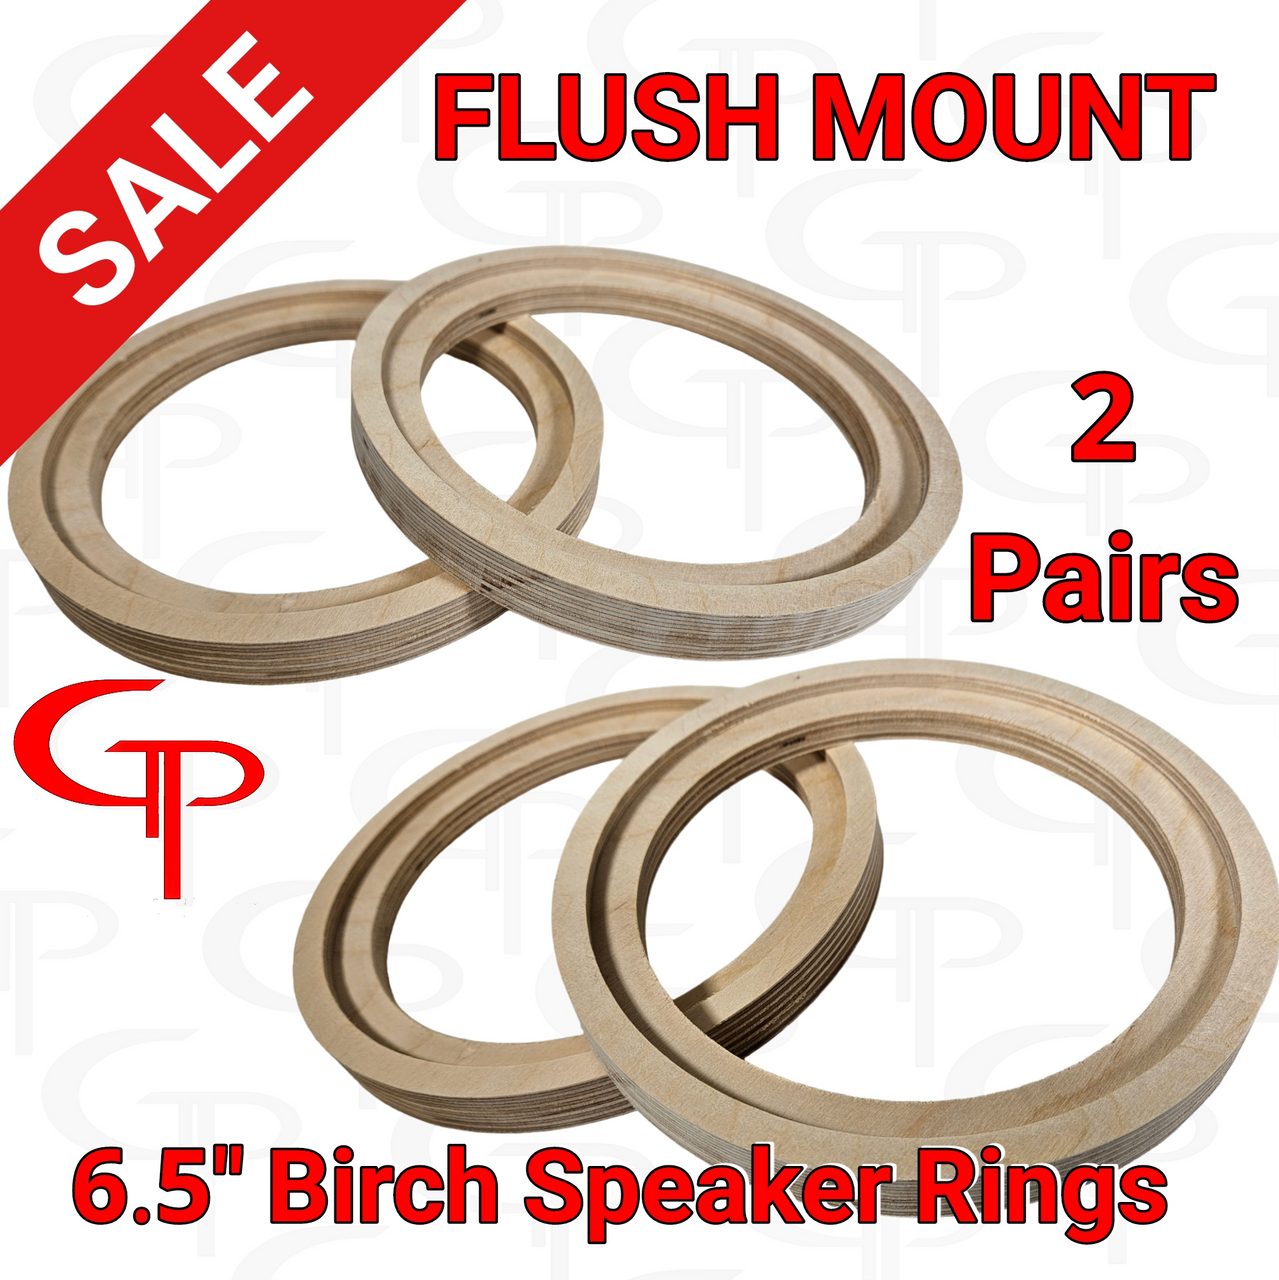 2 Pairs GP 6.5" Flush Mount Birch Speaker Rings 